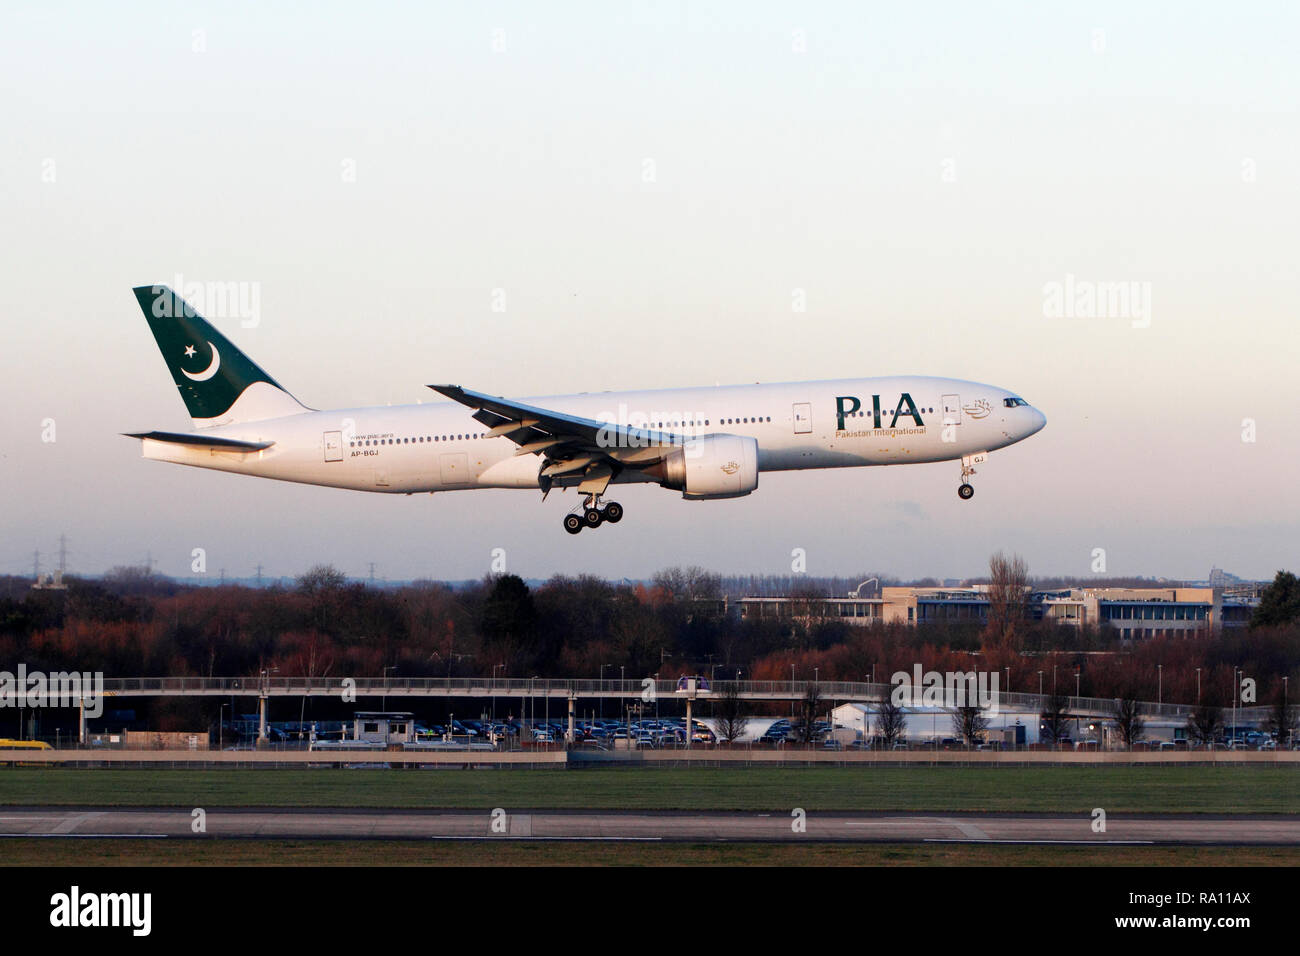 Boeing 777-240, Pakistan International Airlines. PIA. Landing at Heathrow airport terminal 5, London. UK. Stock Photo